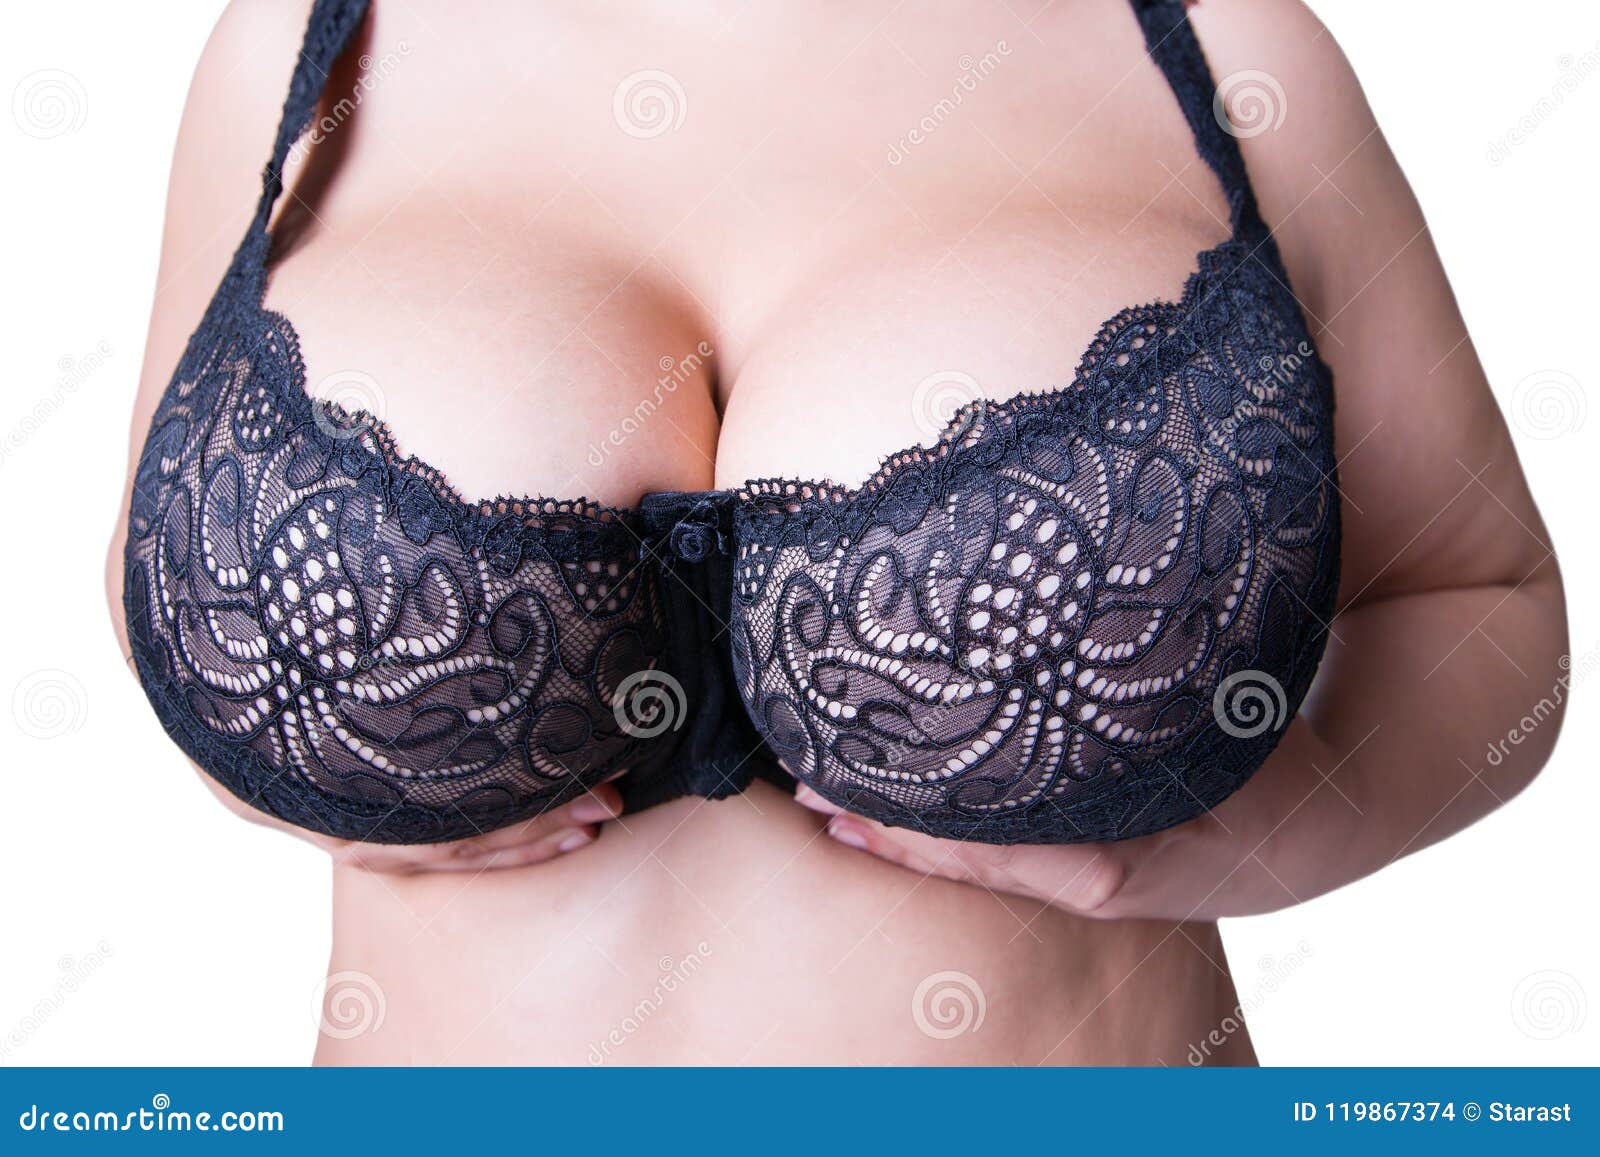 amanda gauvin recommends fat and big tits pic